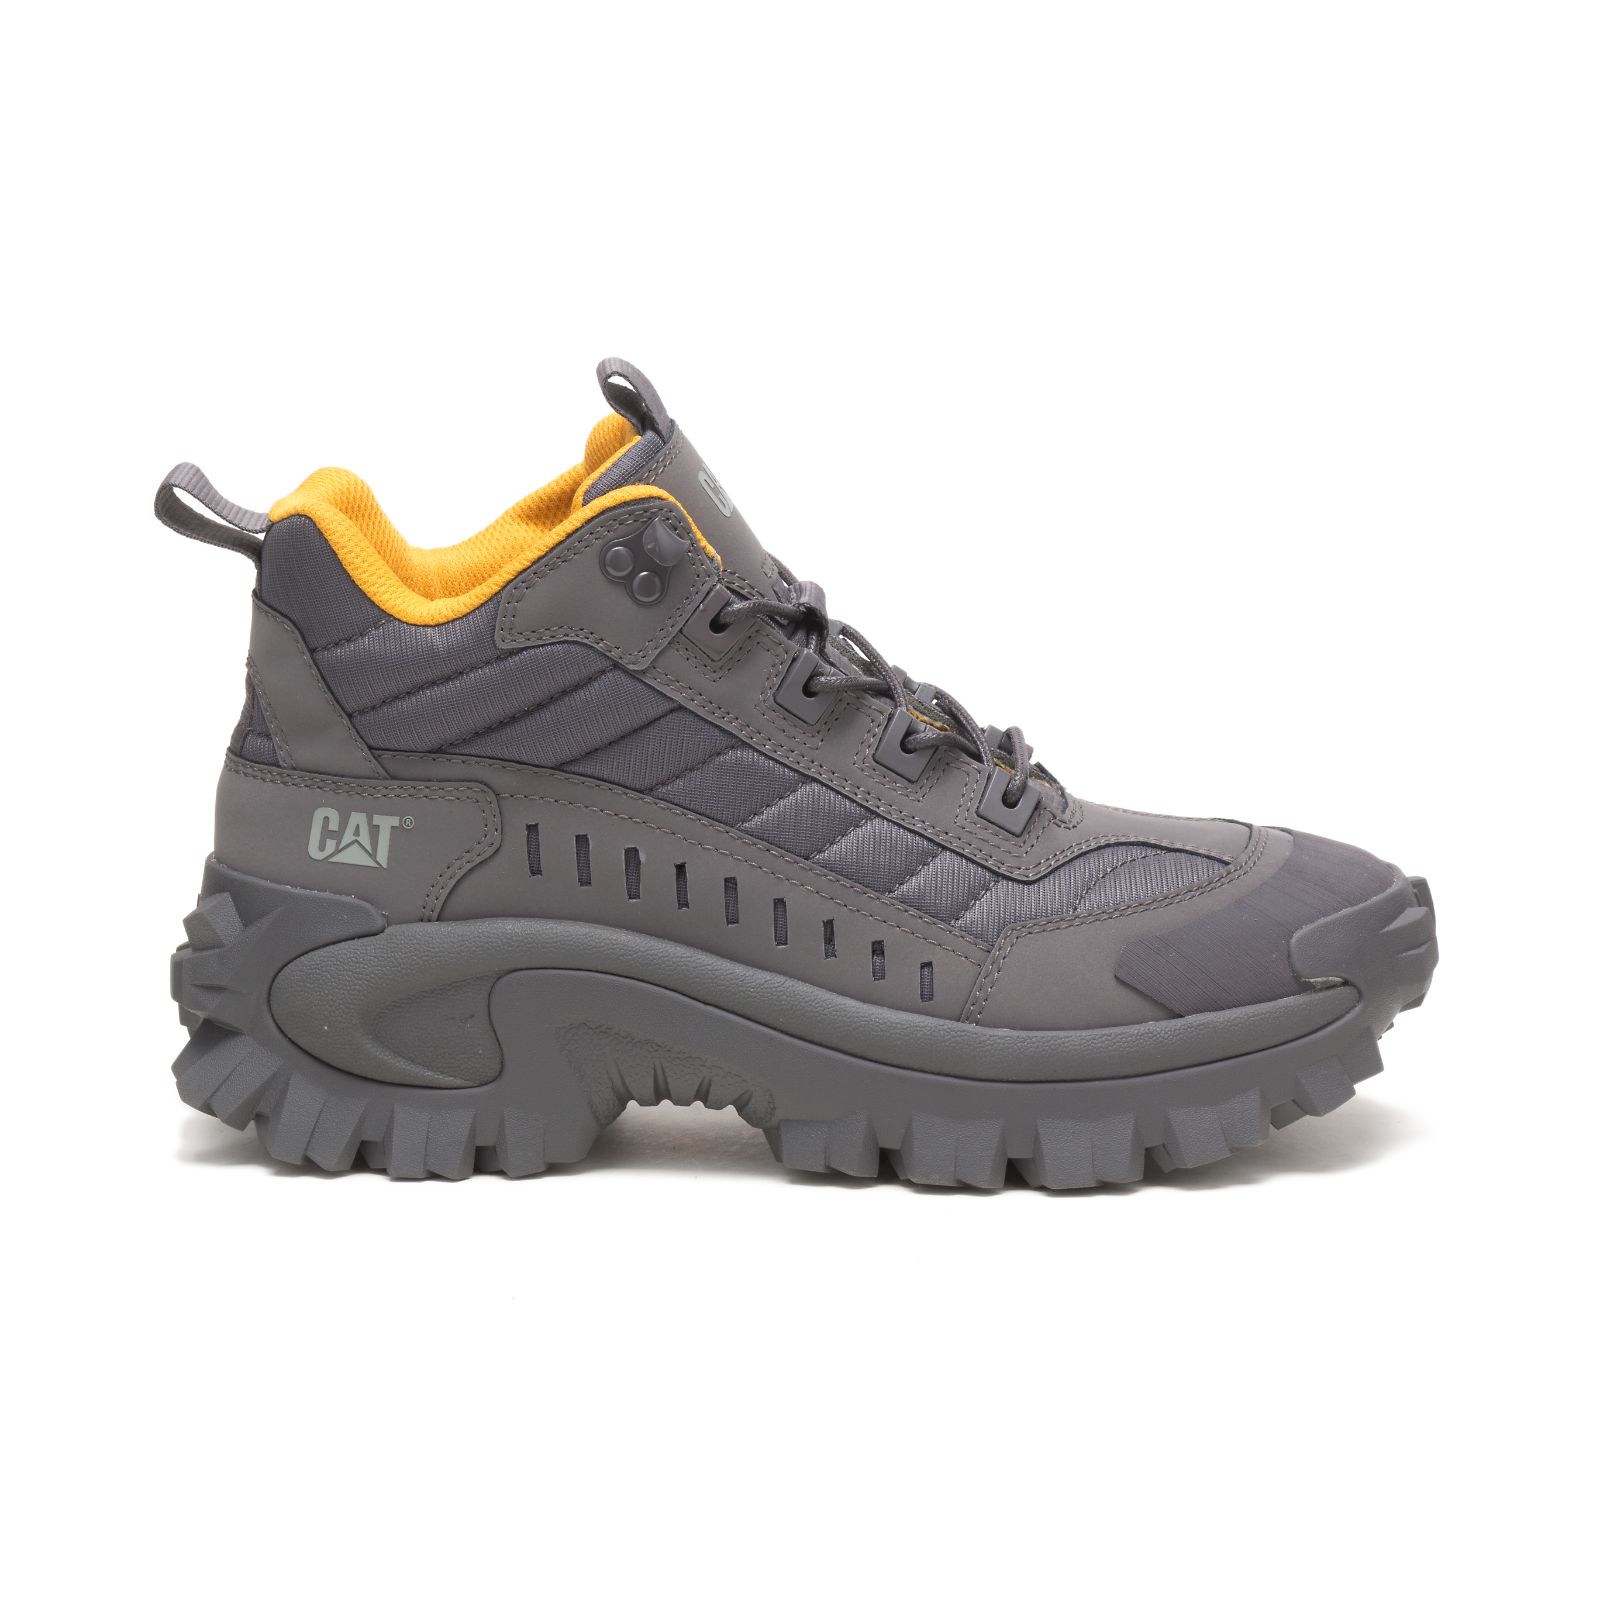 Caterpillar Shoes Sale Pakistan - Caterpillar Intruder Mid Mens Sneakers deep grey (790615-WHR)